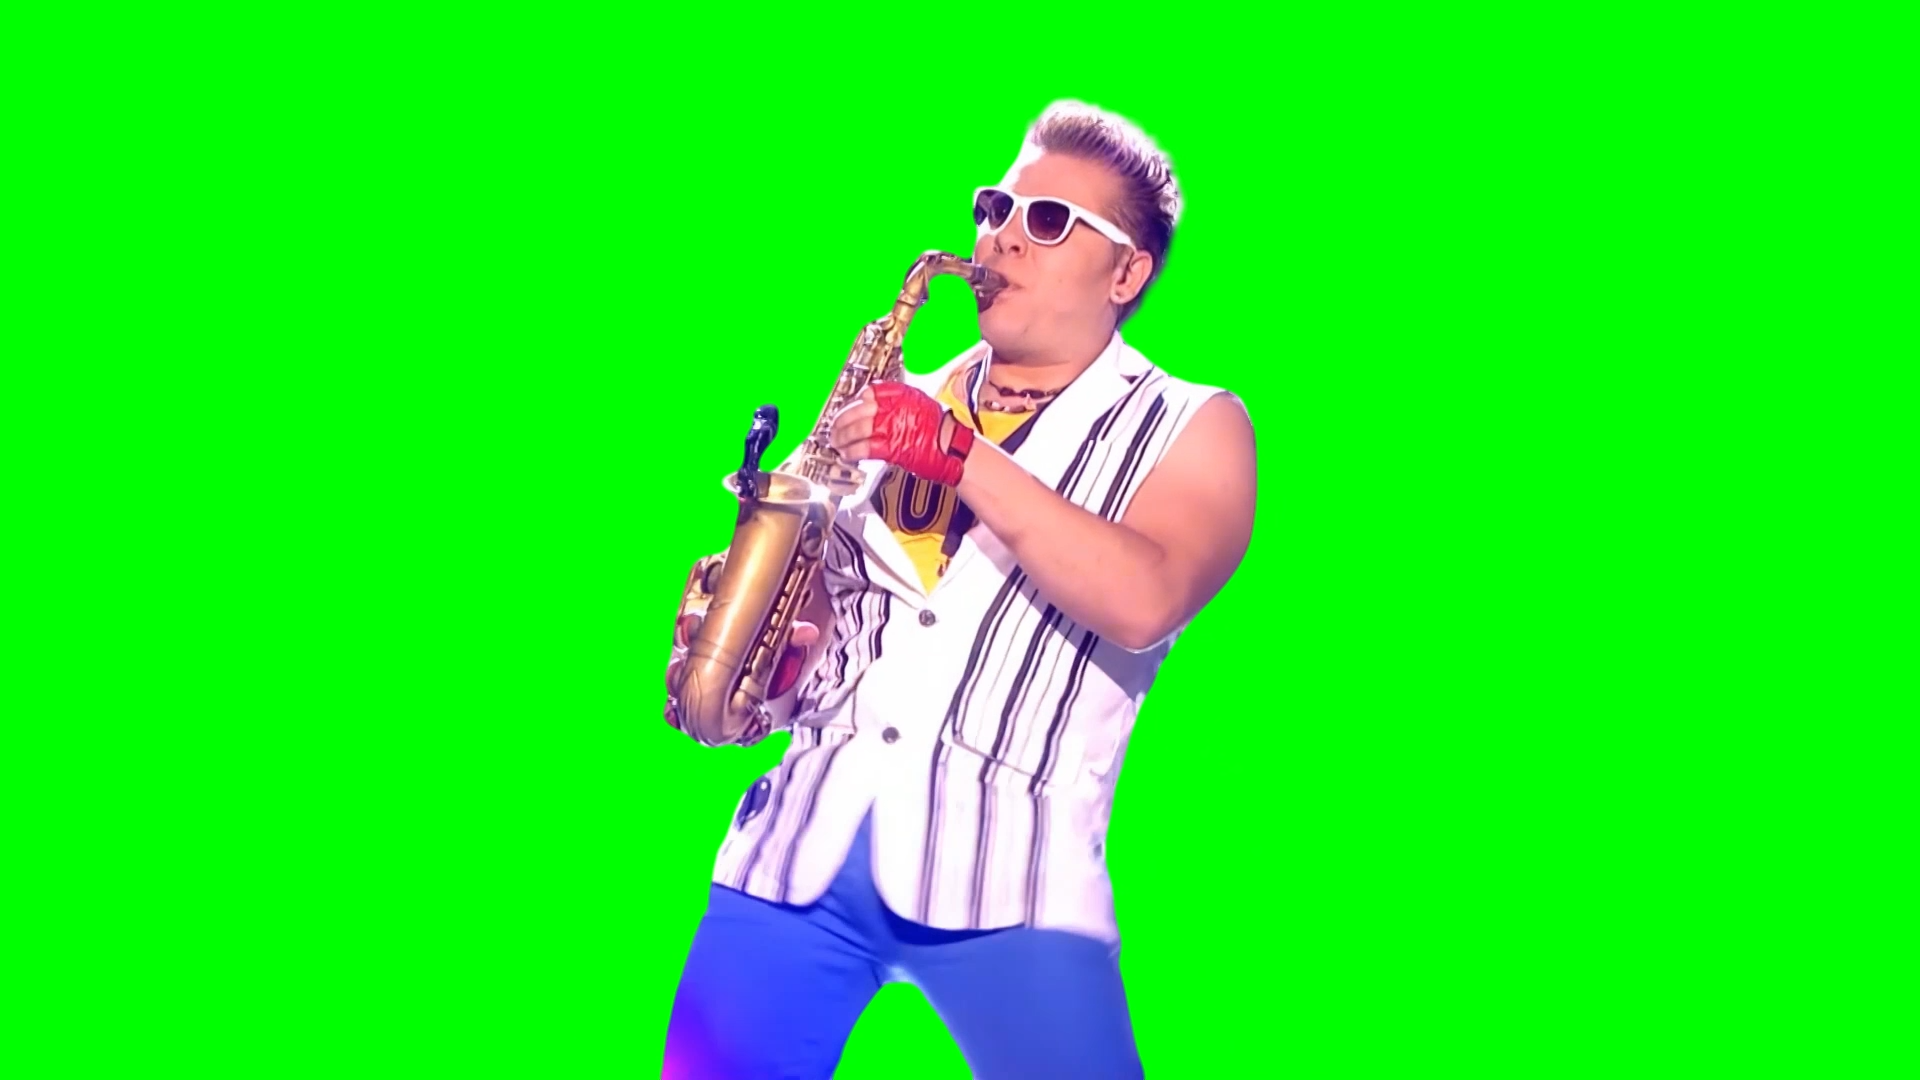 Epic Sax Guy meme (Green Screen)